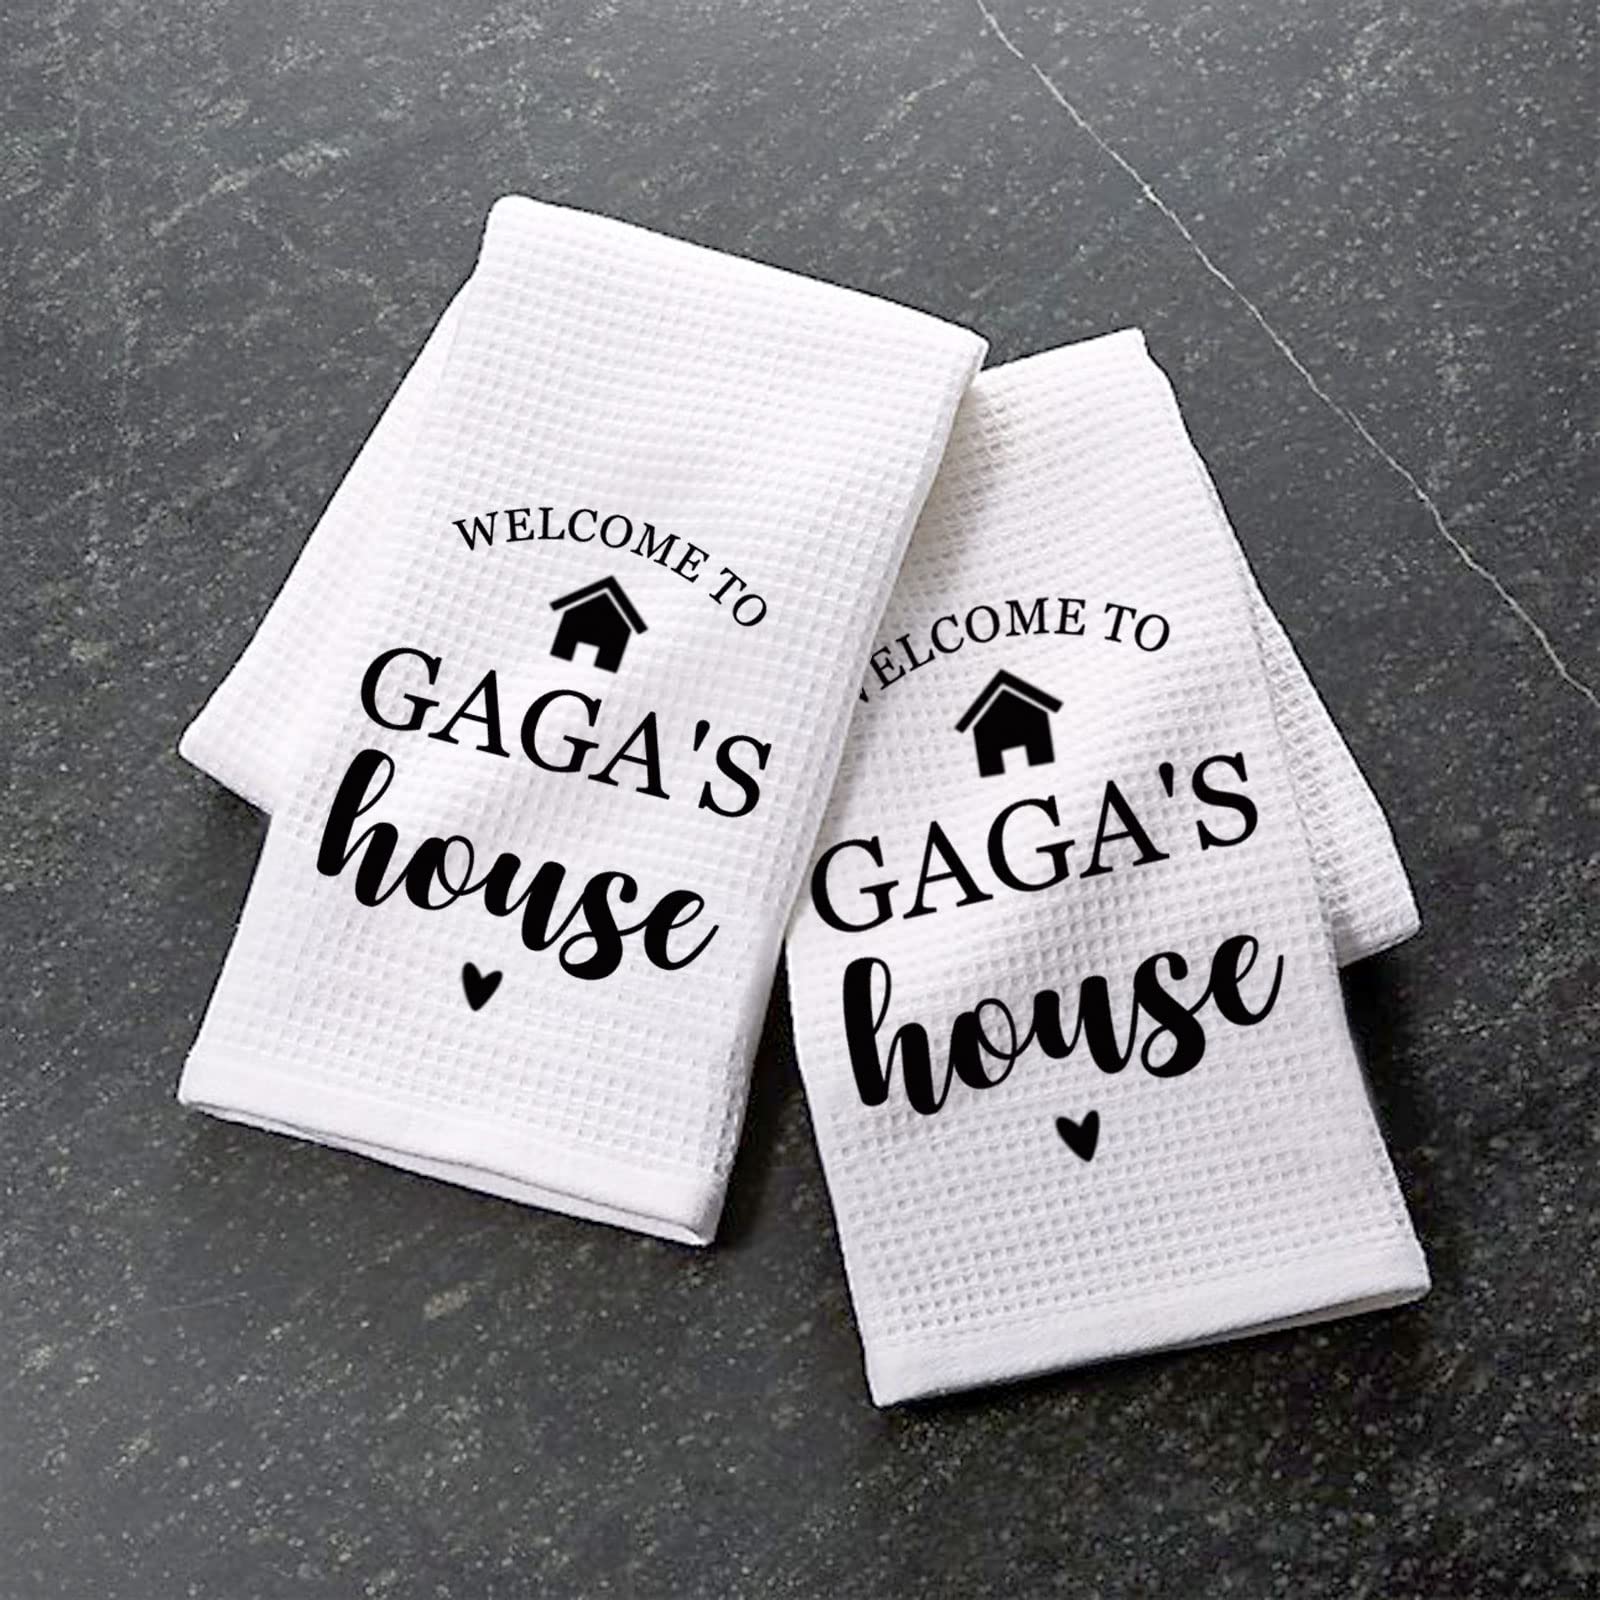 PXTIDY Gaga Gift Grandma Kitchen Towel Welcome to Gaga'S House Dish Towel Tea Towel (Welcome to GAGA'S House)